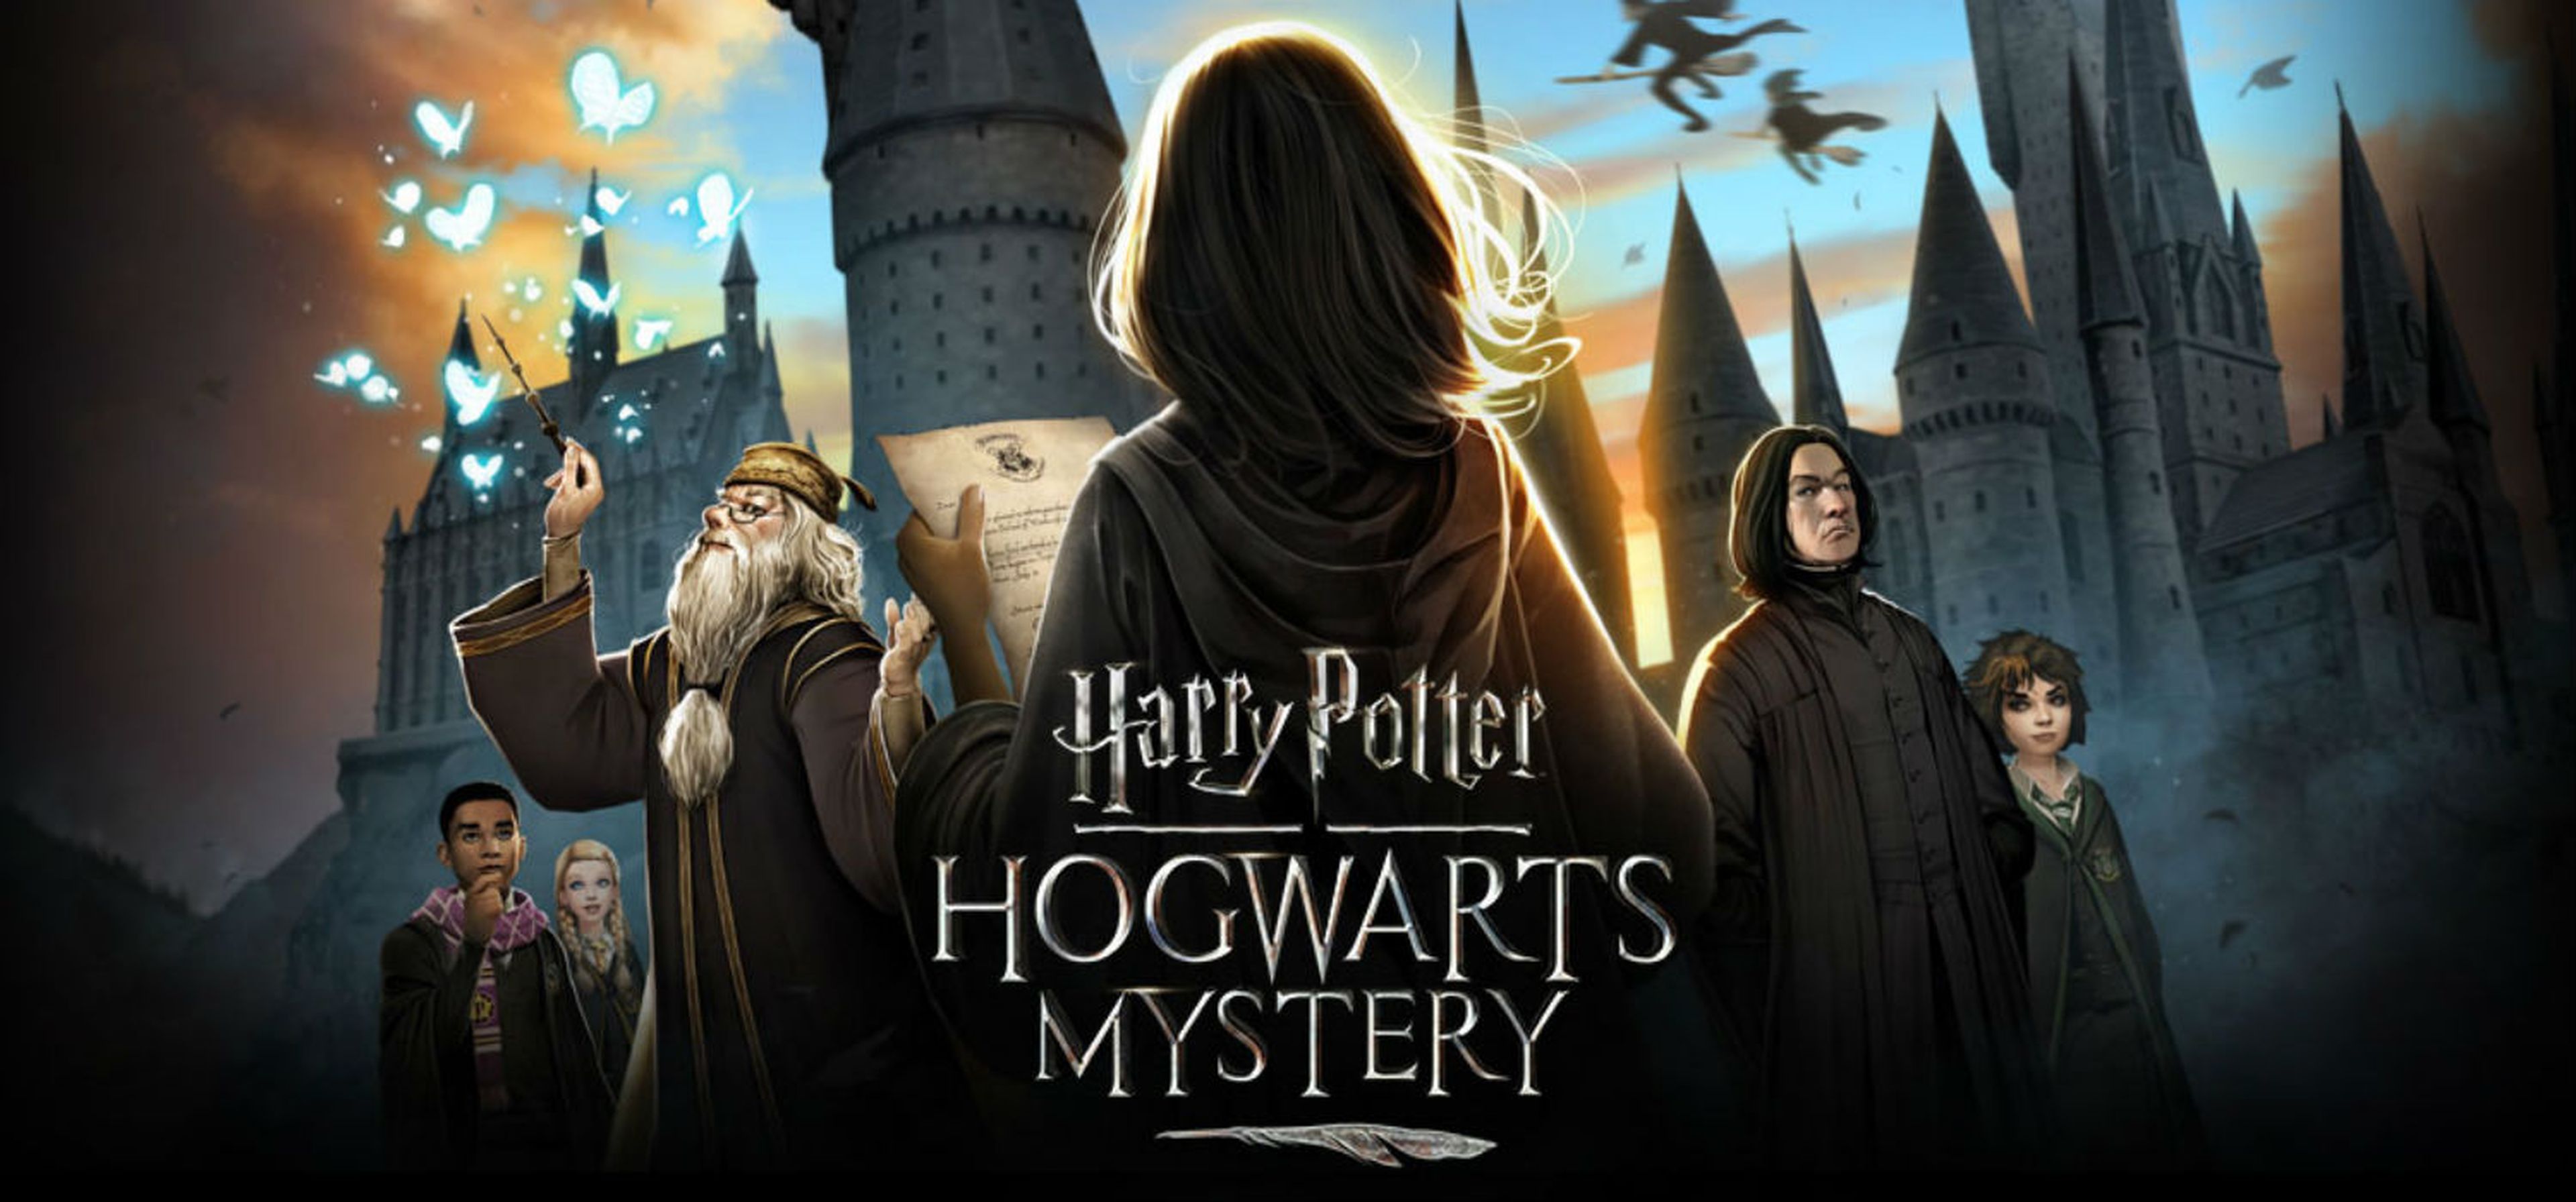 Análisis de Harry Potter Hogwarts Mistery, el RPG para móviles